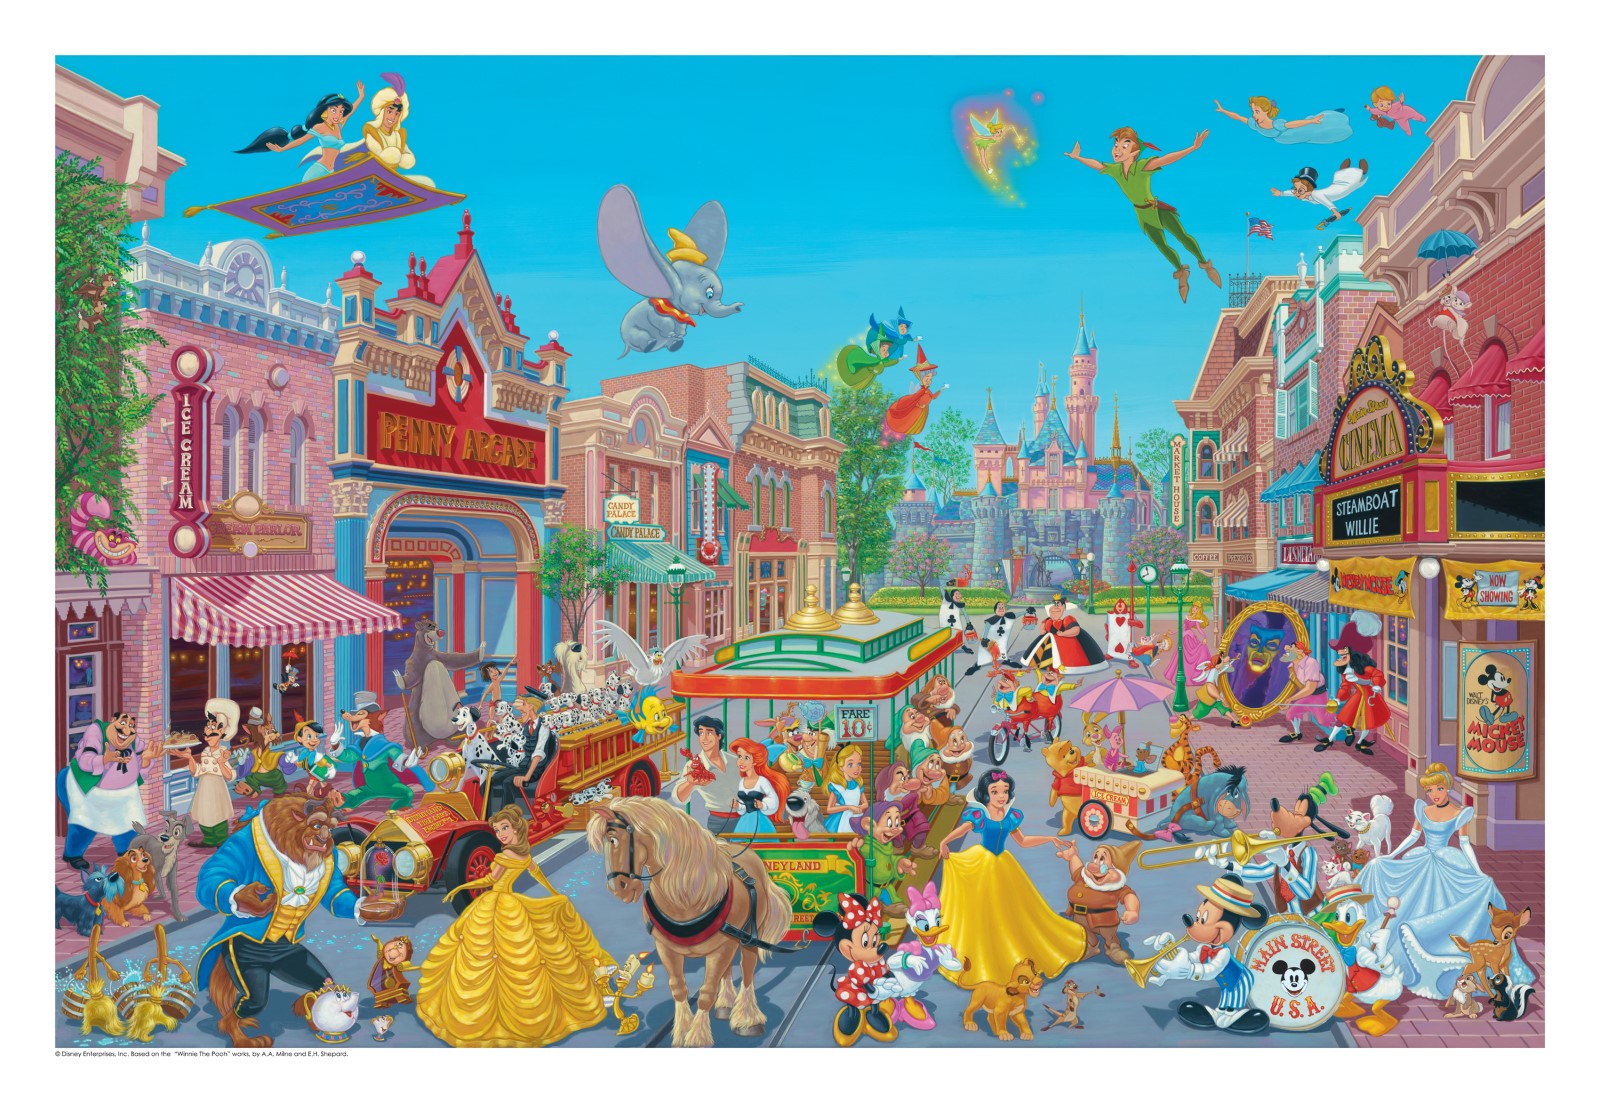 The Happiest Street on Earth by Manuel Hernandez inspired by Disneyland